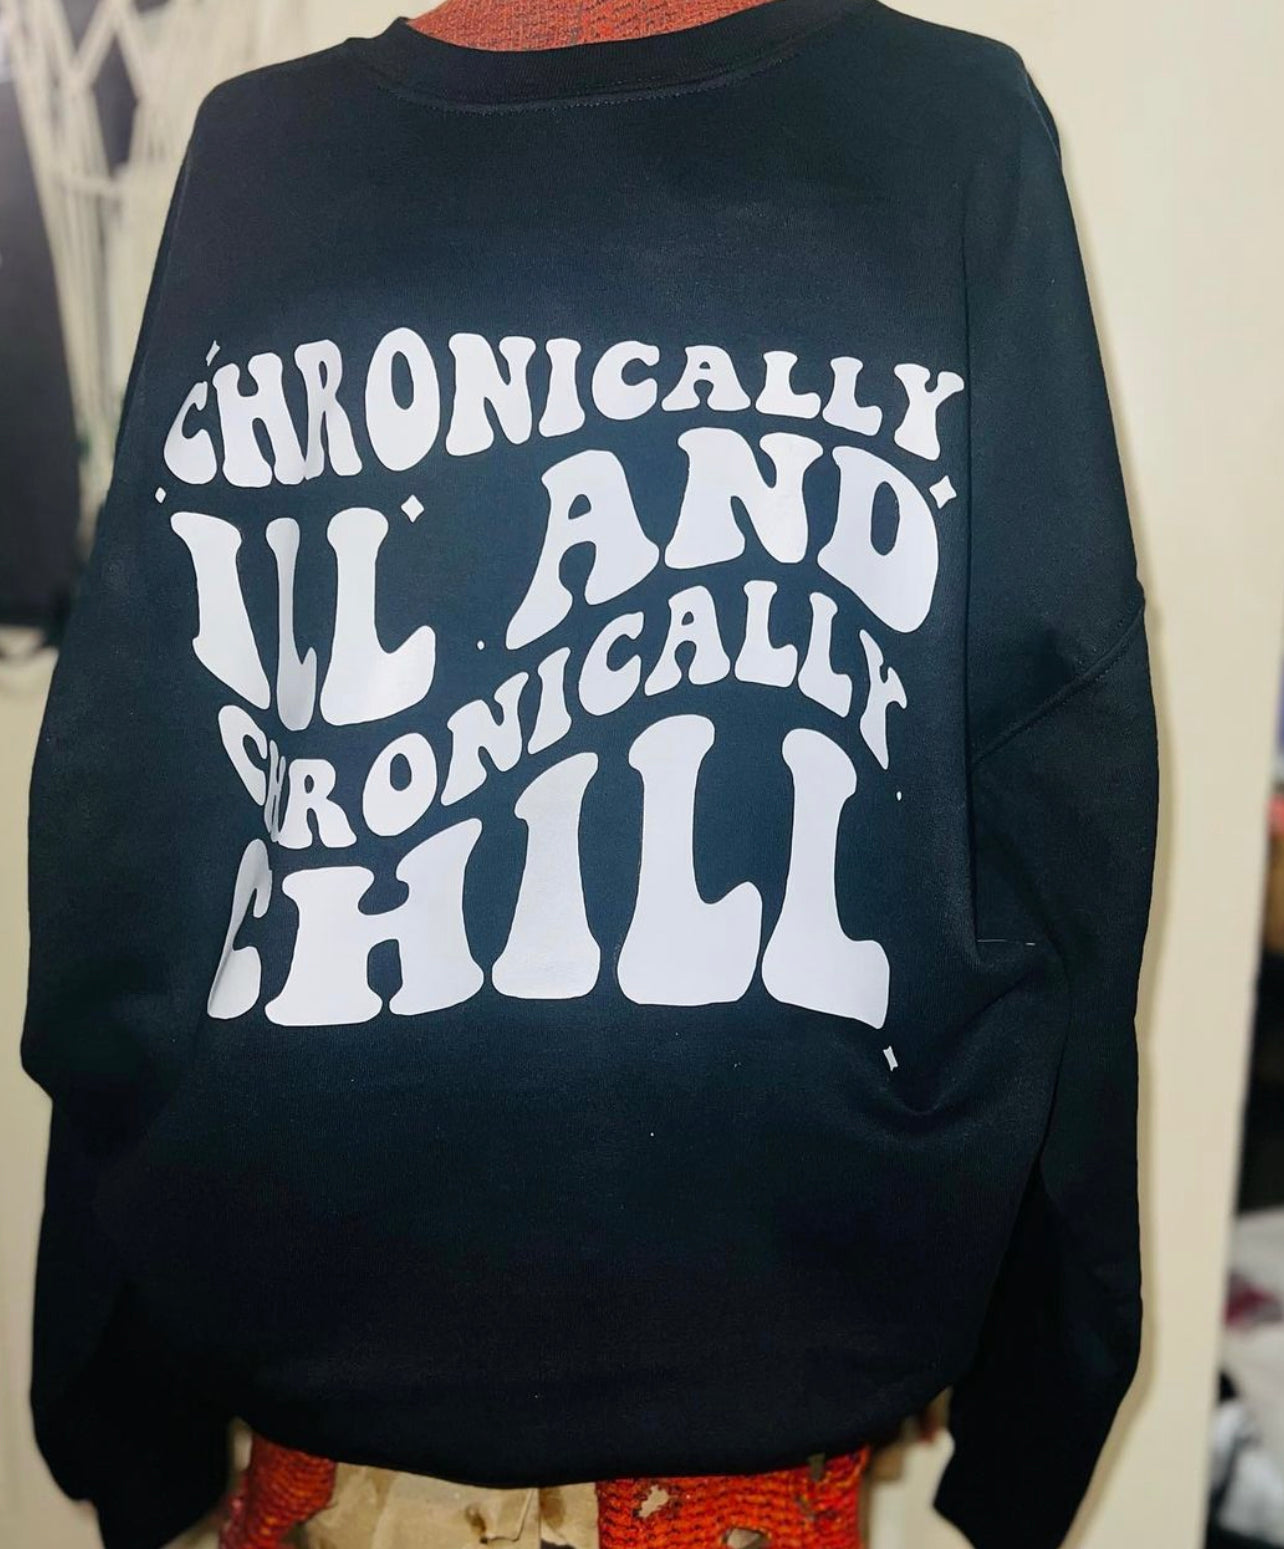 Chronically Ill and Chronically Chill Custom Sweatshirt or Tee